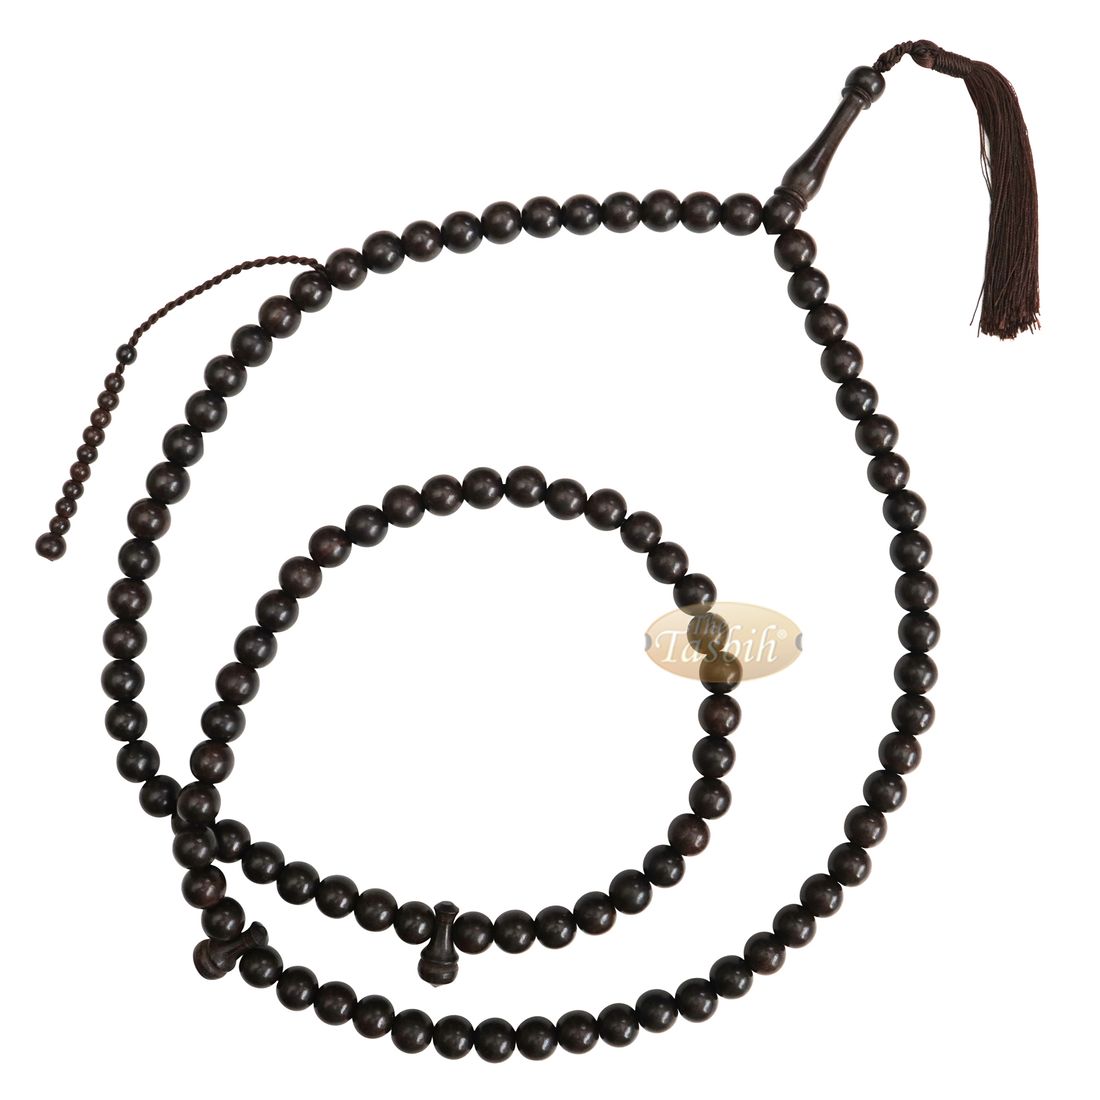 Unique Extra Large Dense Tamarind Wood Tasbih – Islamic Prayer Beads – 12mm Beads with Tassel